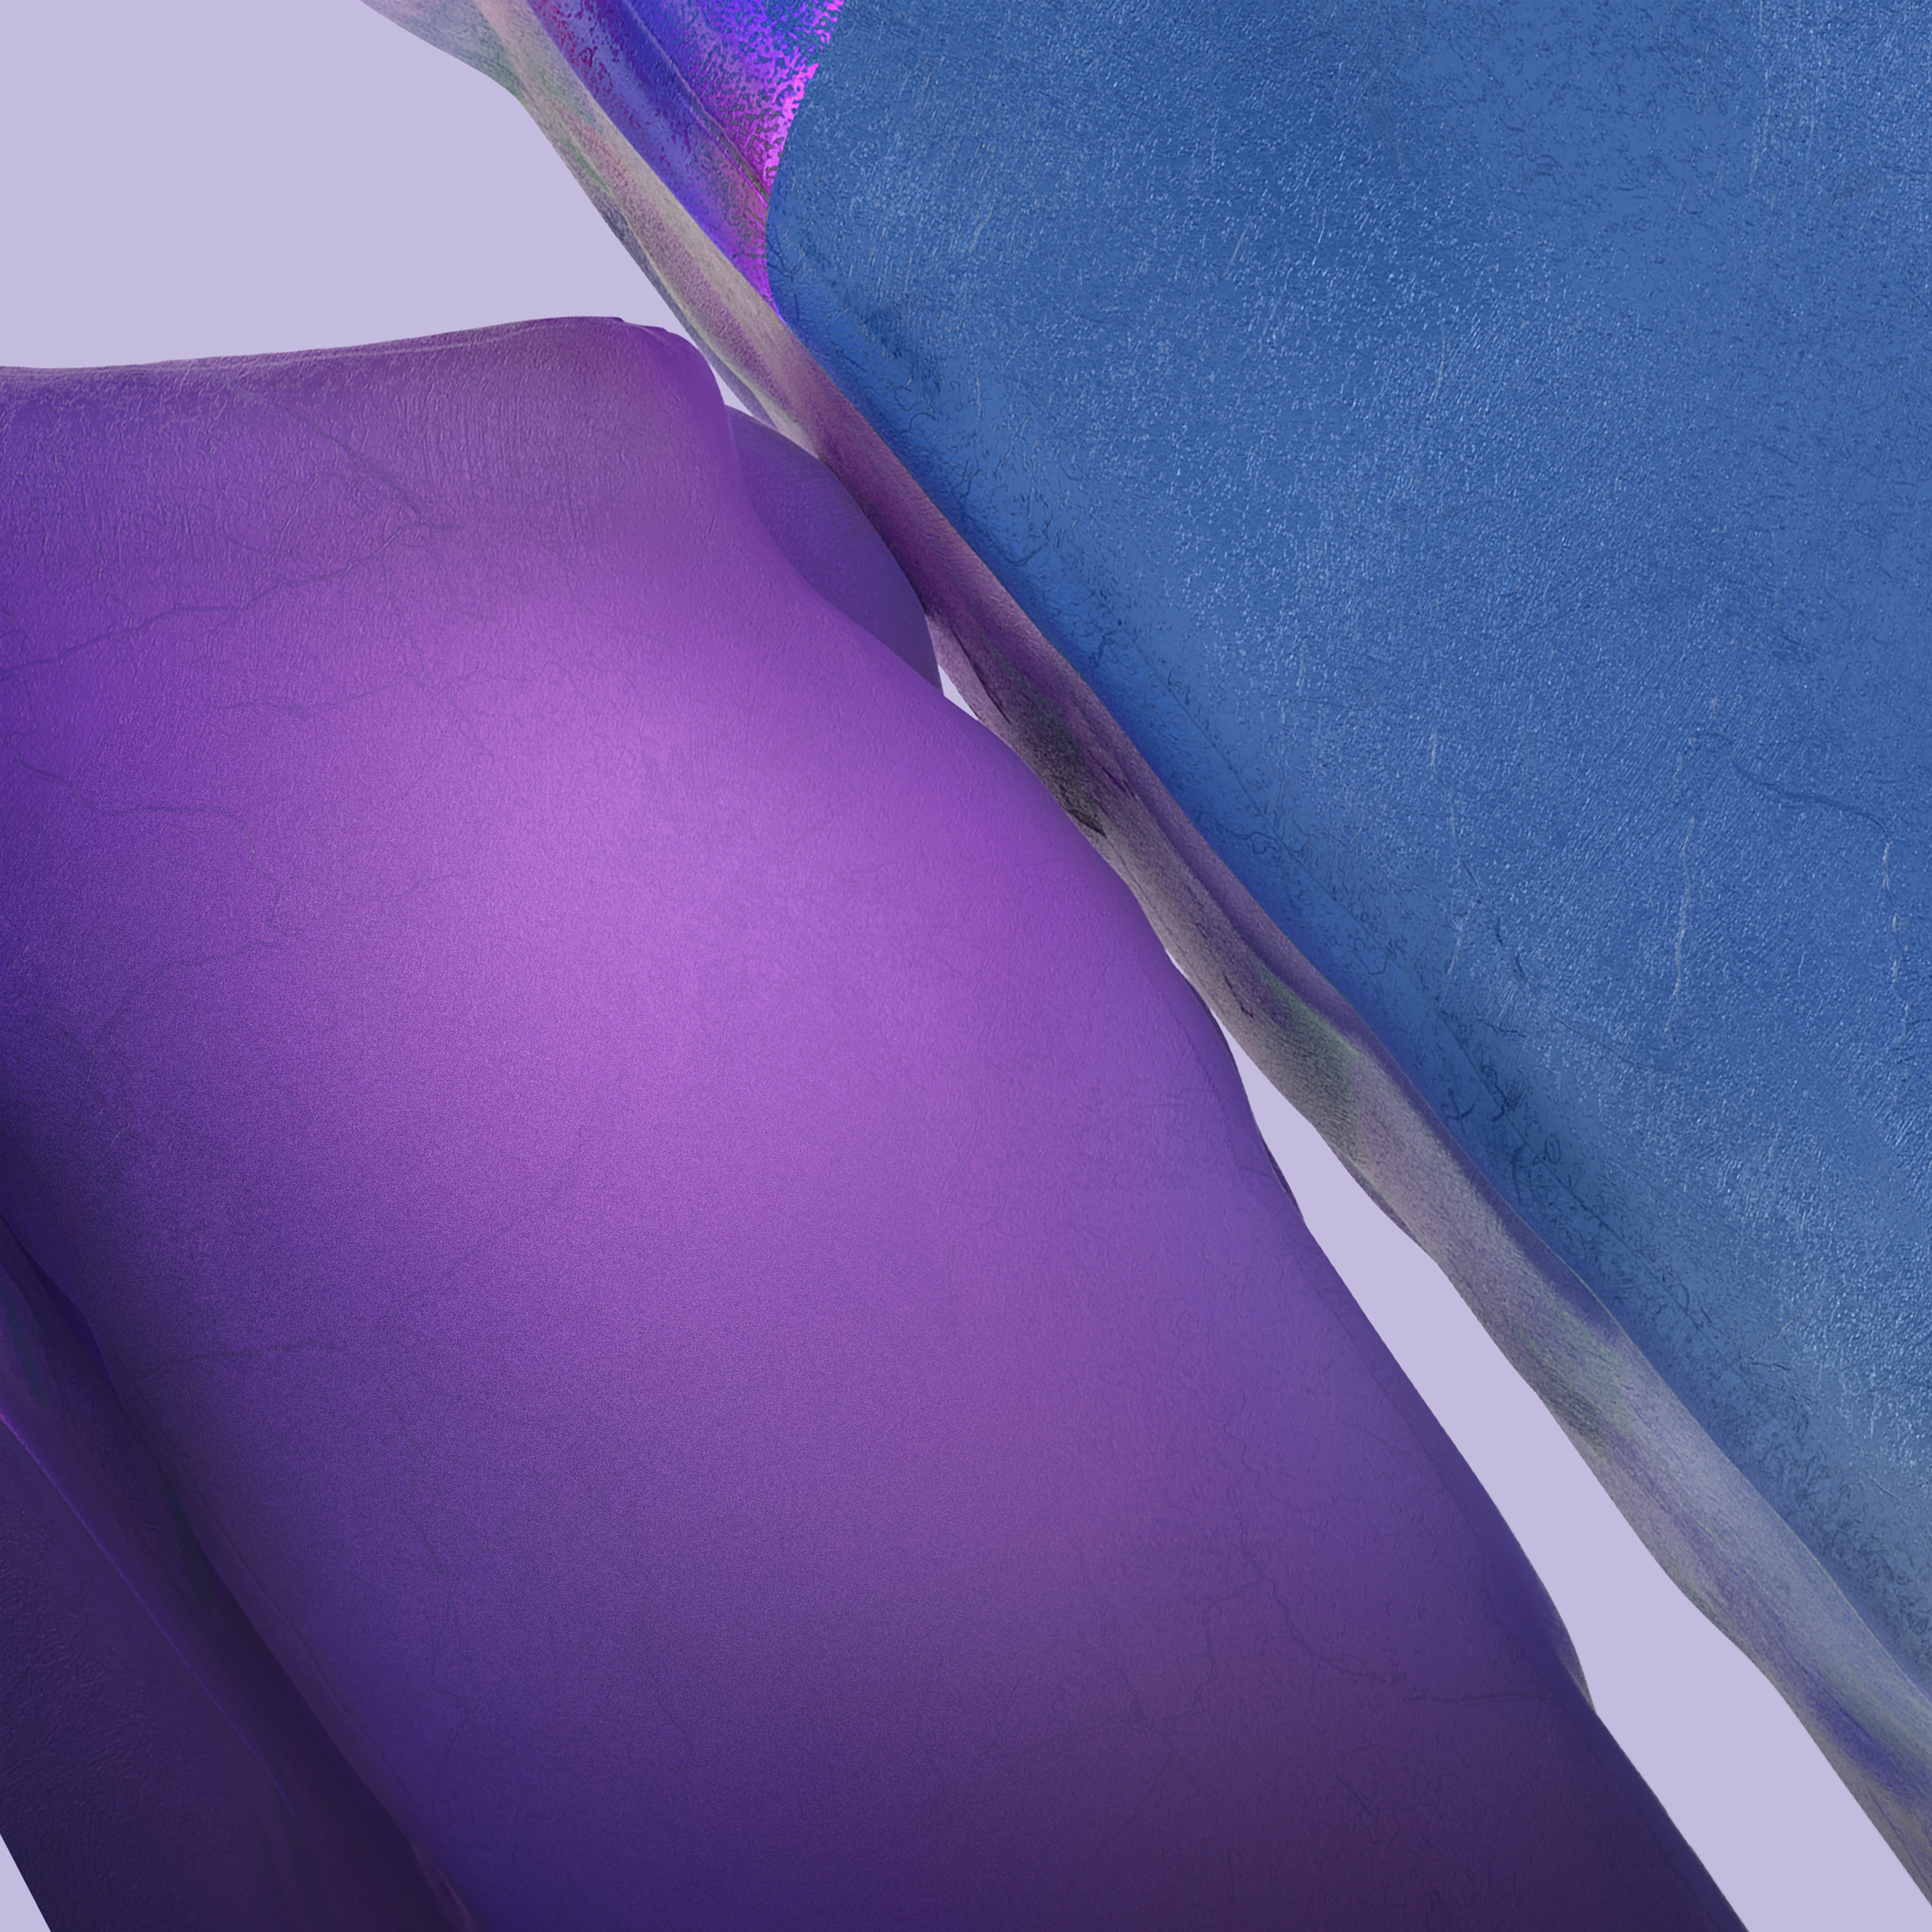 HD wallpaper, Blue, Stock, Samsung Galaxy Note 20 Ultra, Purple Abstract